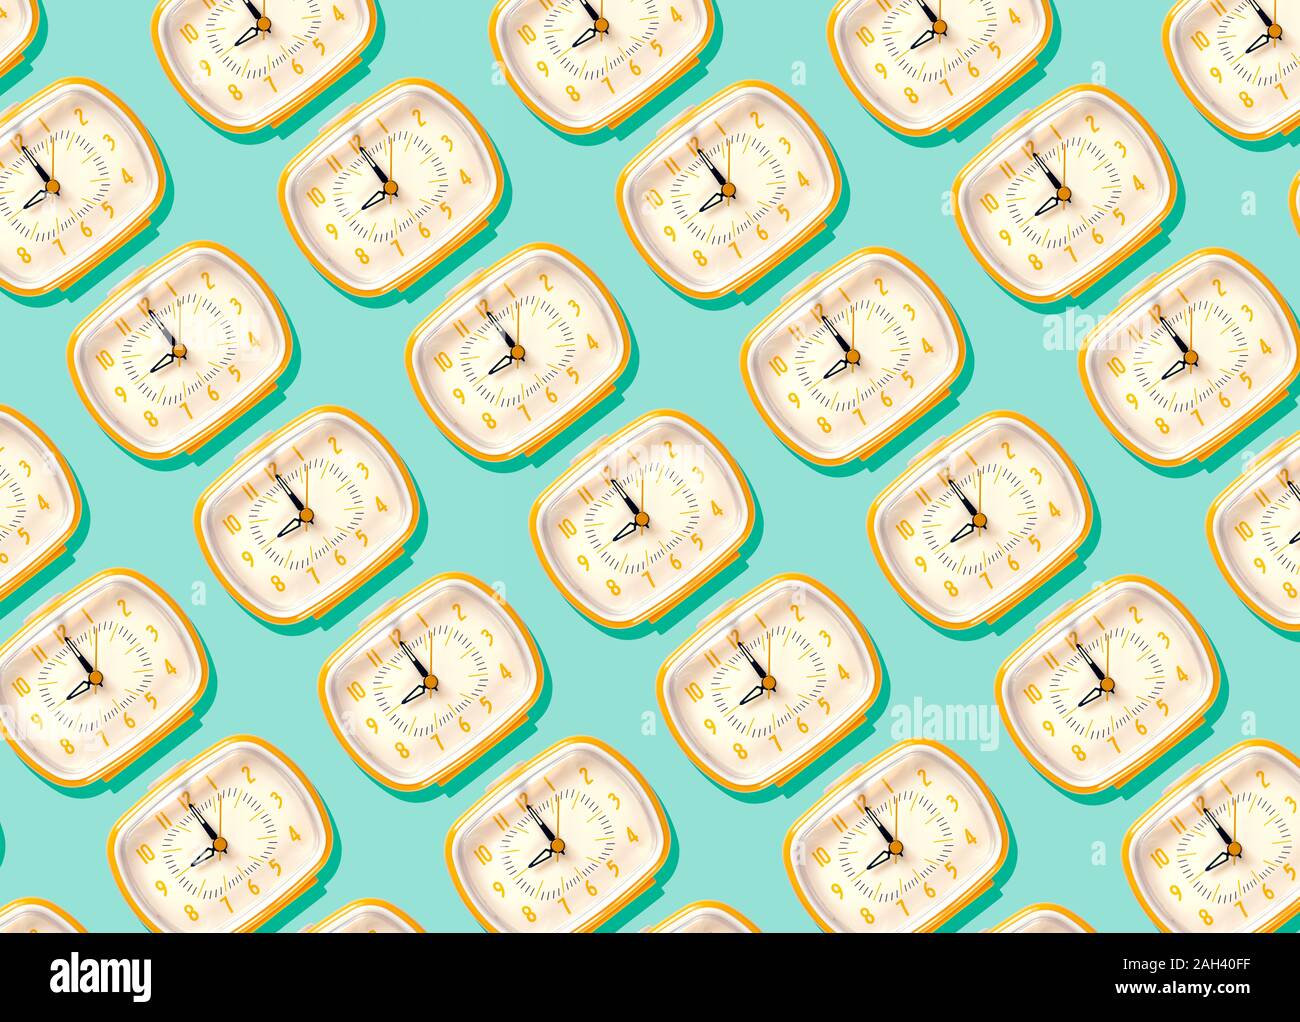 3D Illustration, row of yellow alarm clocks at nine o'clock pattern on turquoise background Stock Photo